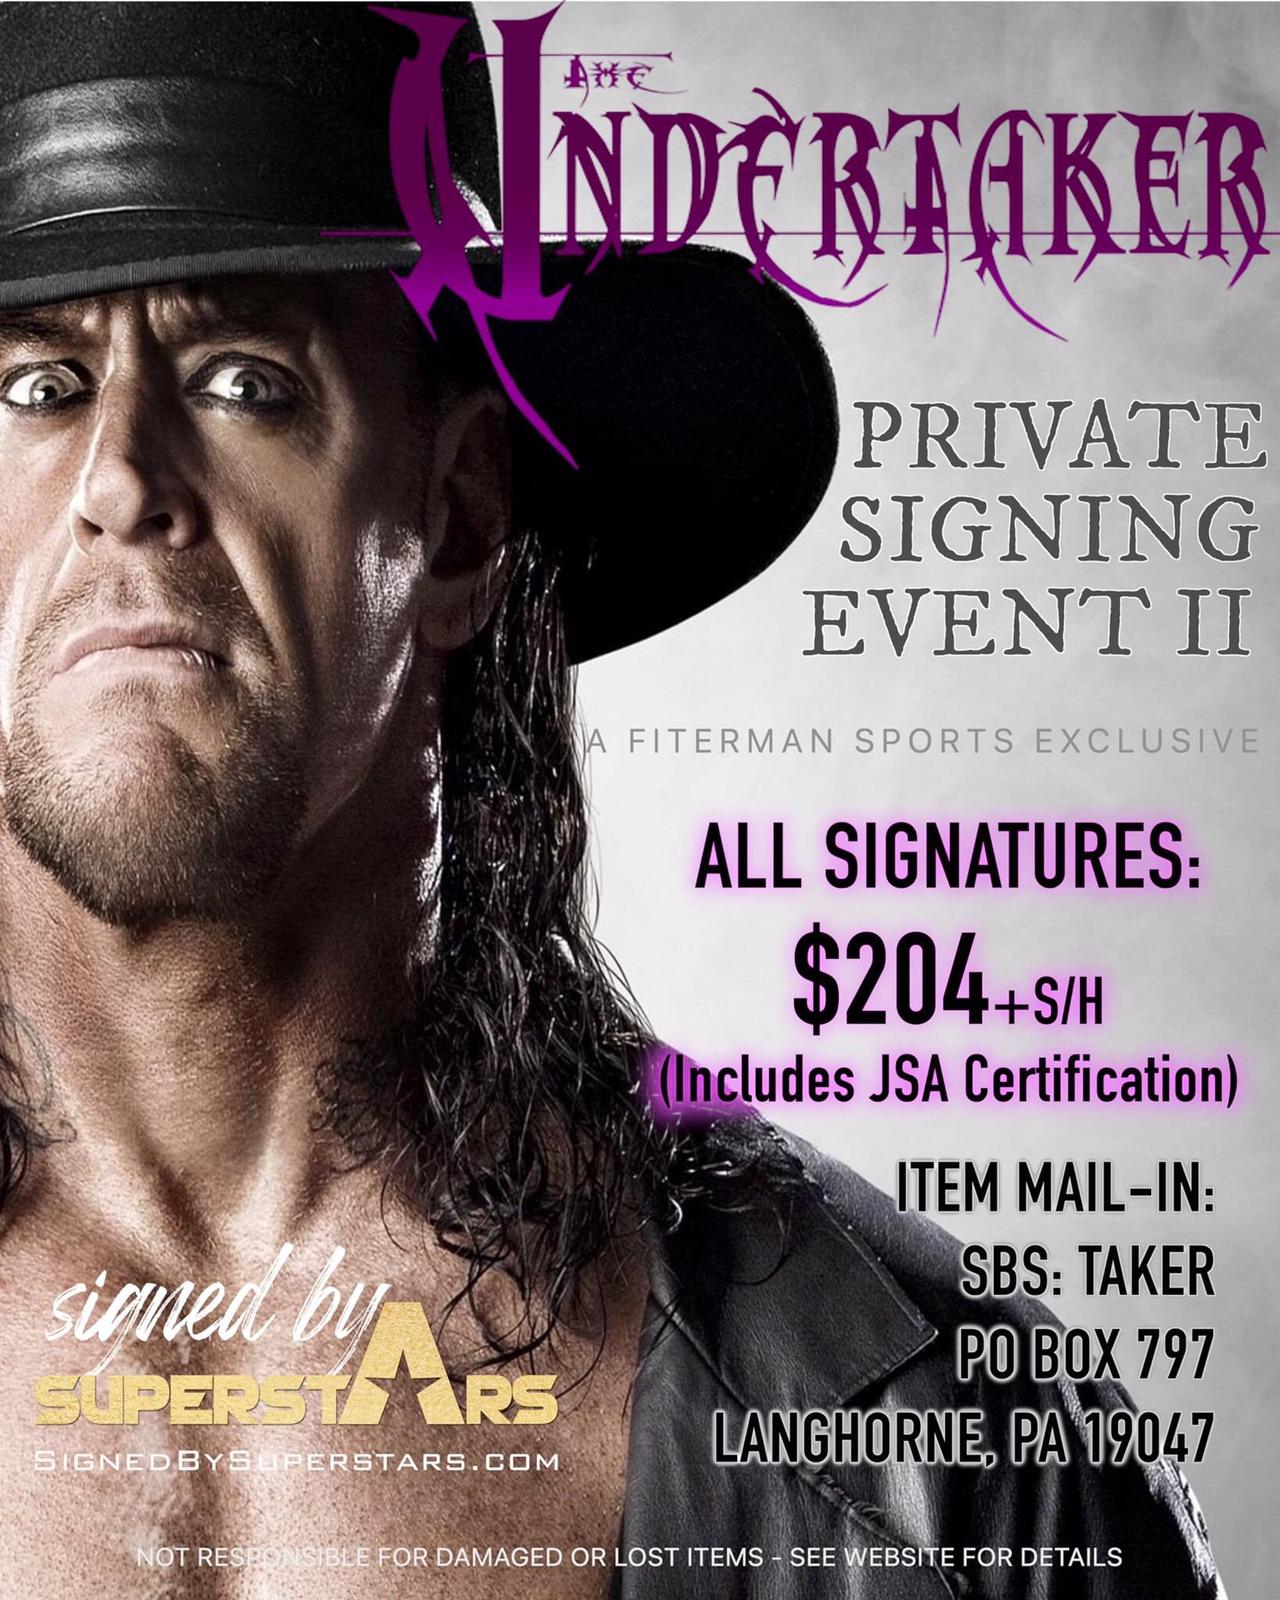 The Undertaker: in vendita le sue firme certificate esternamente alla WWE